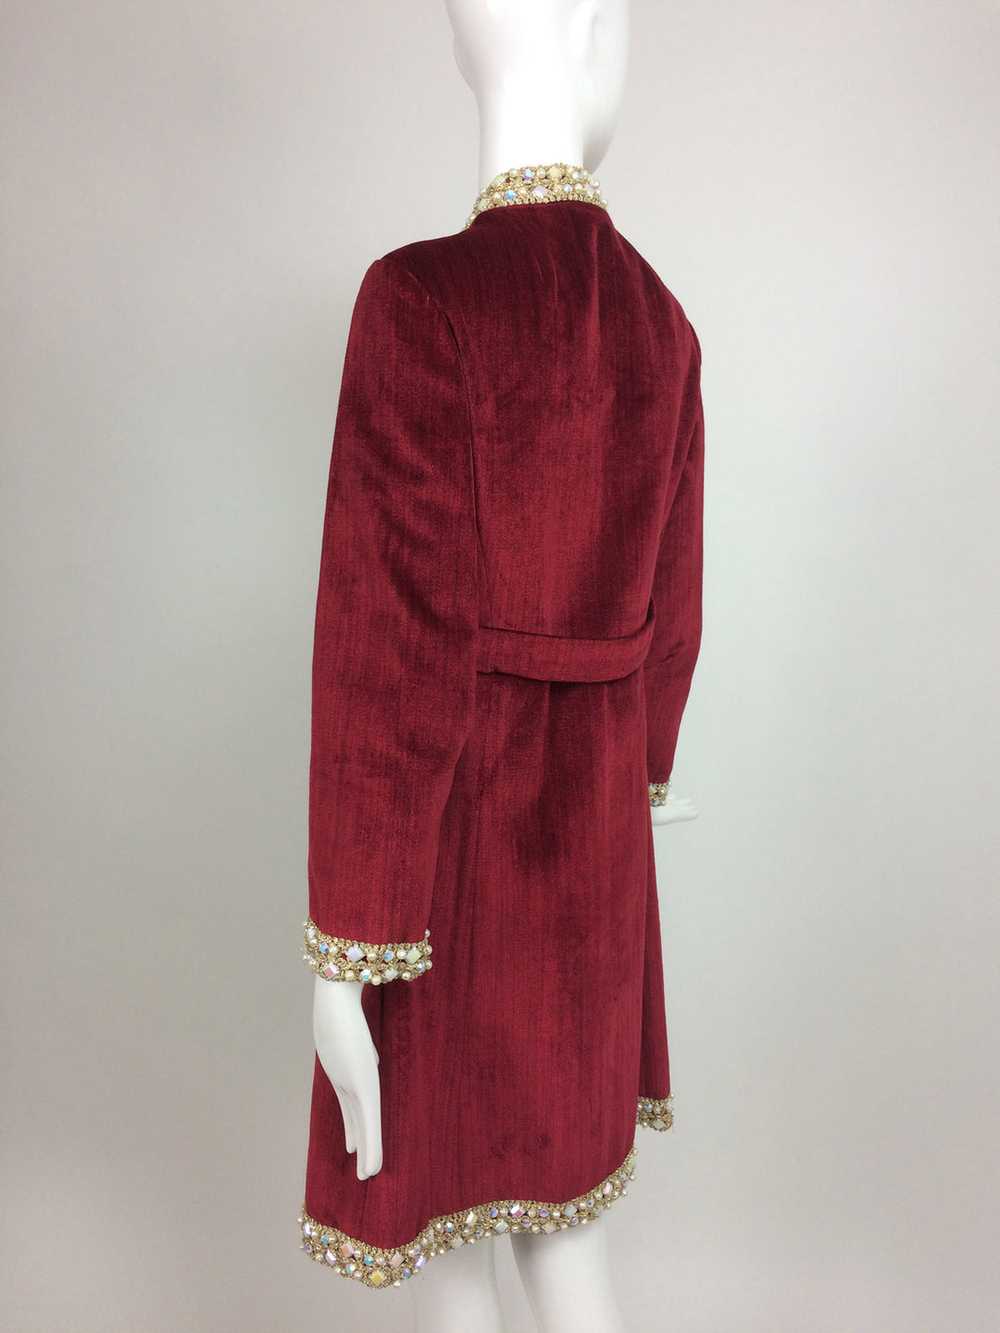 Garnet Red Silky Cotton Velvet Jewel Trim Mod Dre… - image 5